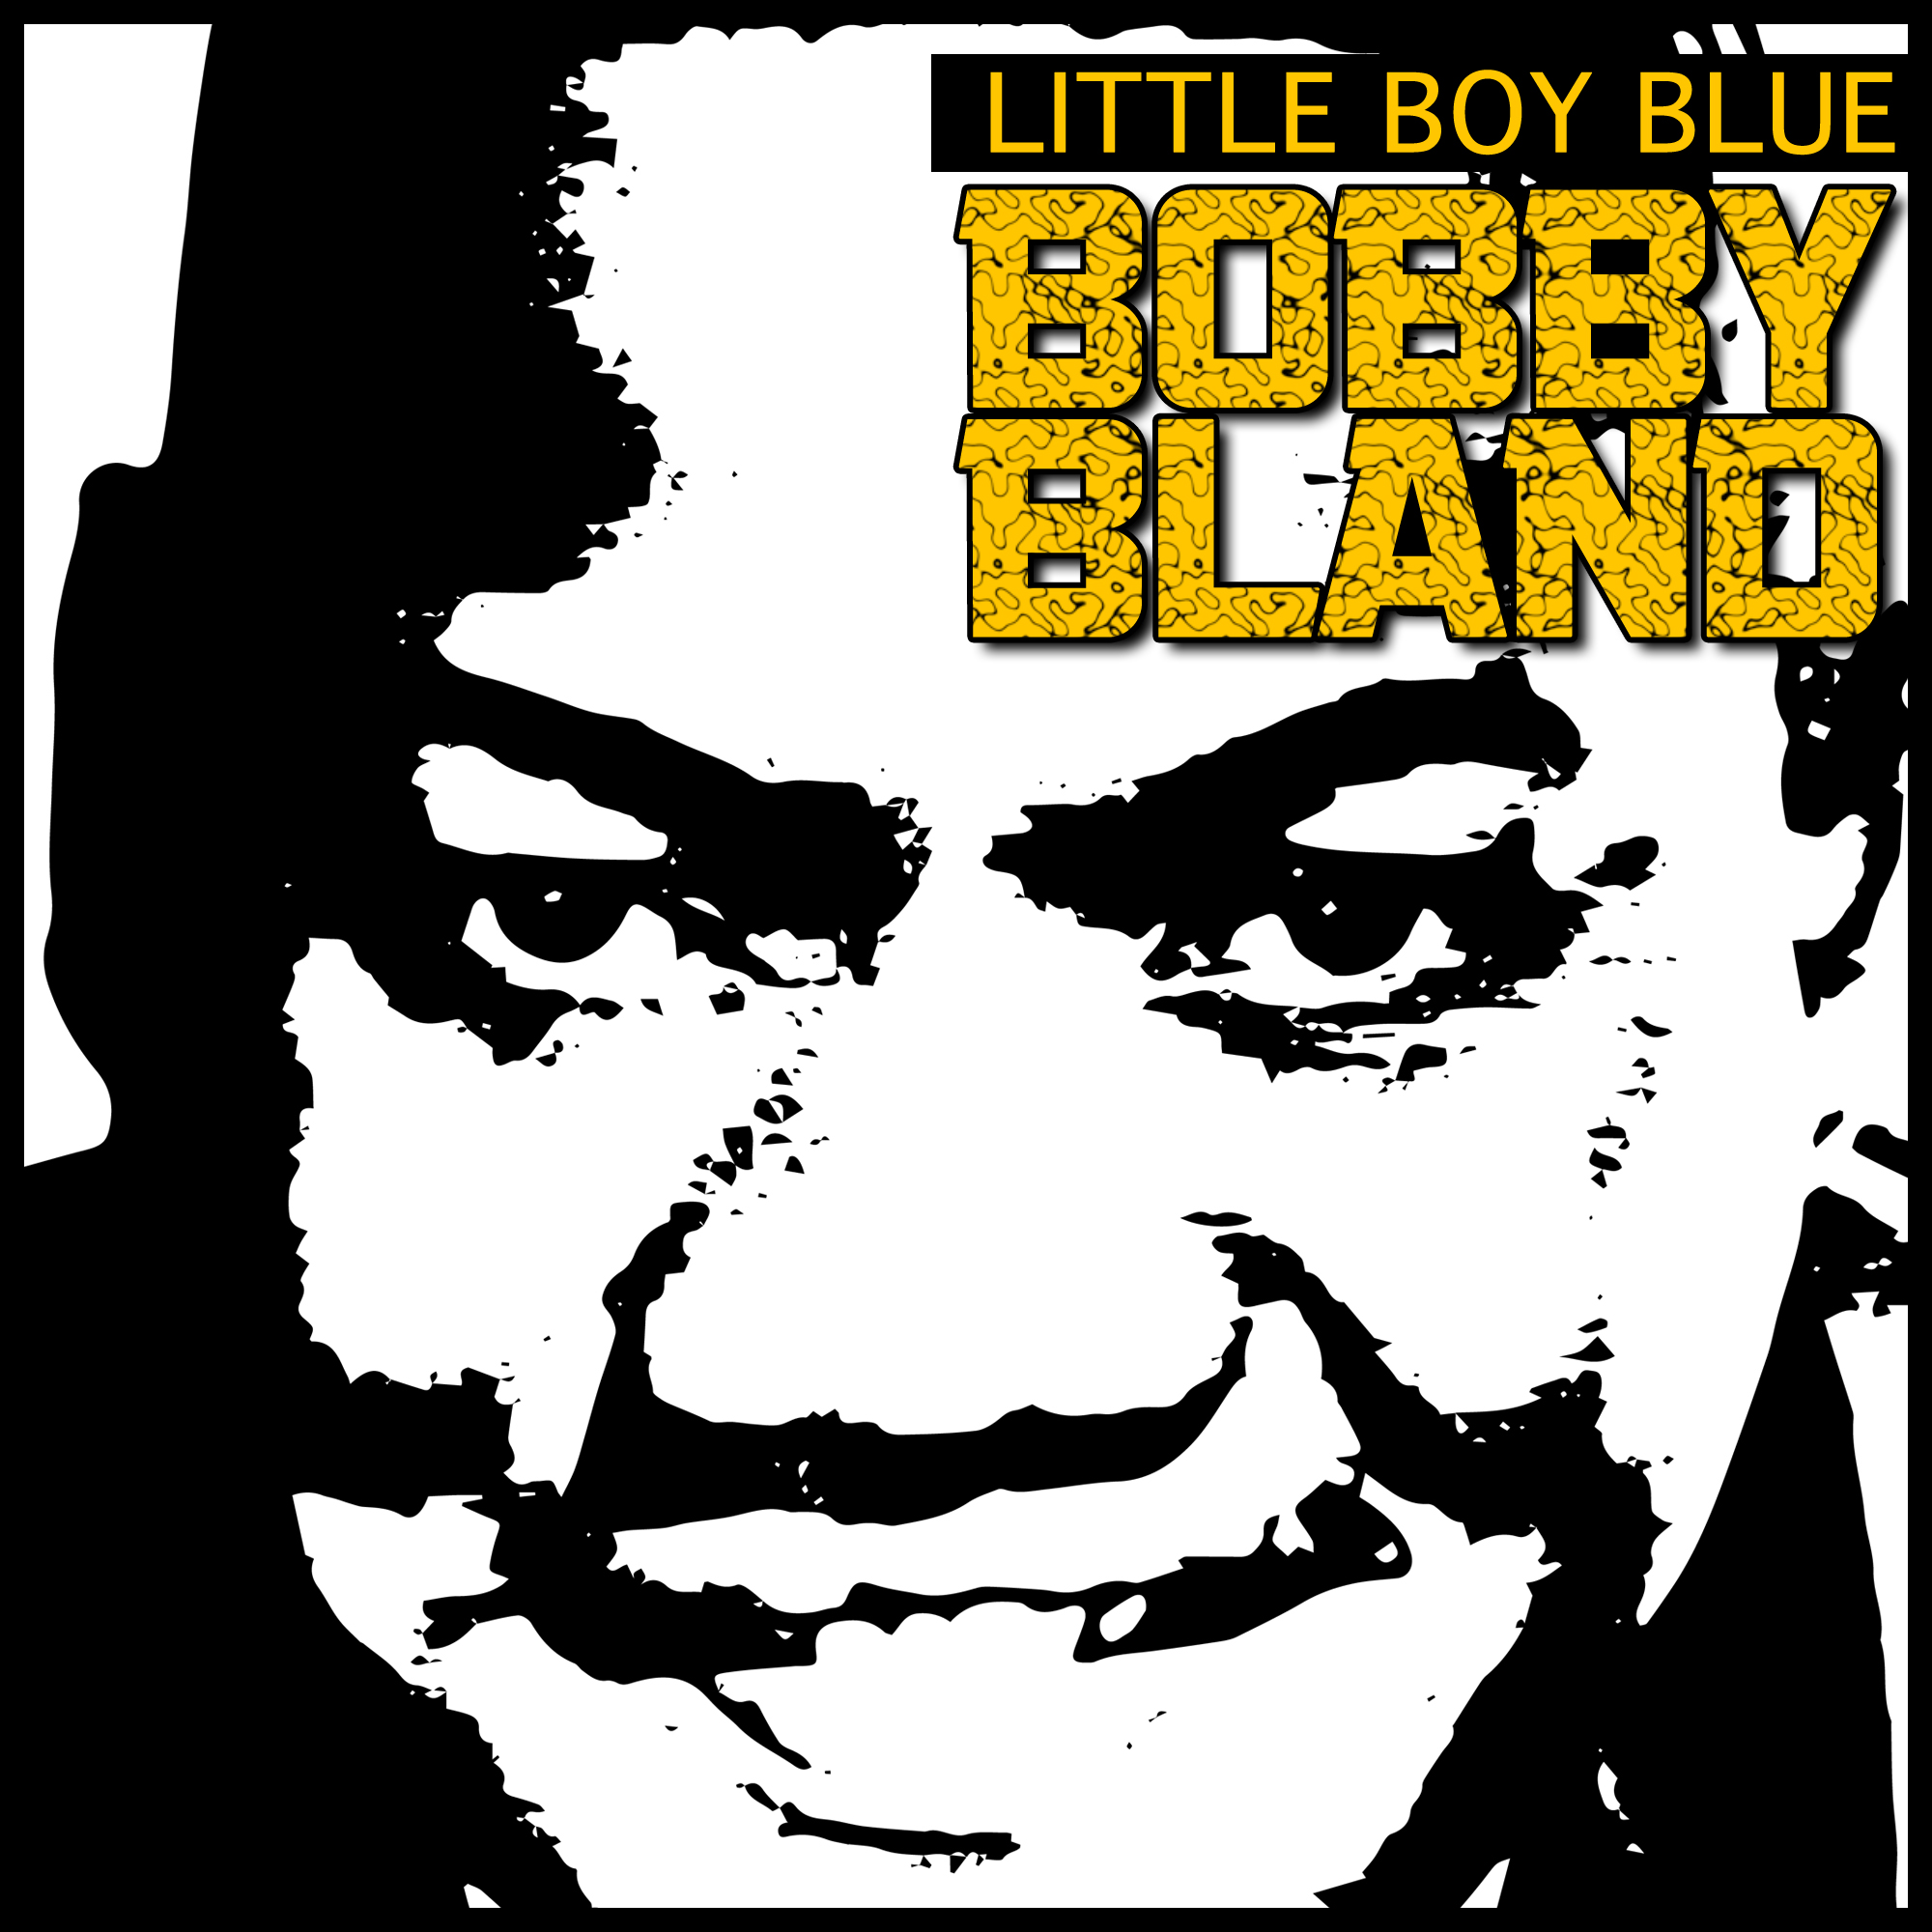 Little Boy Blue – Bobby Bland